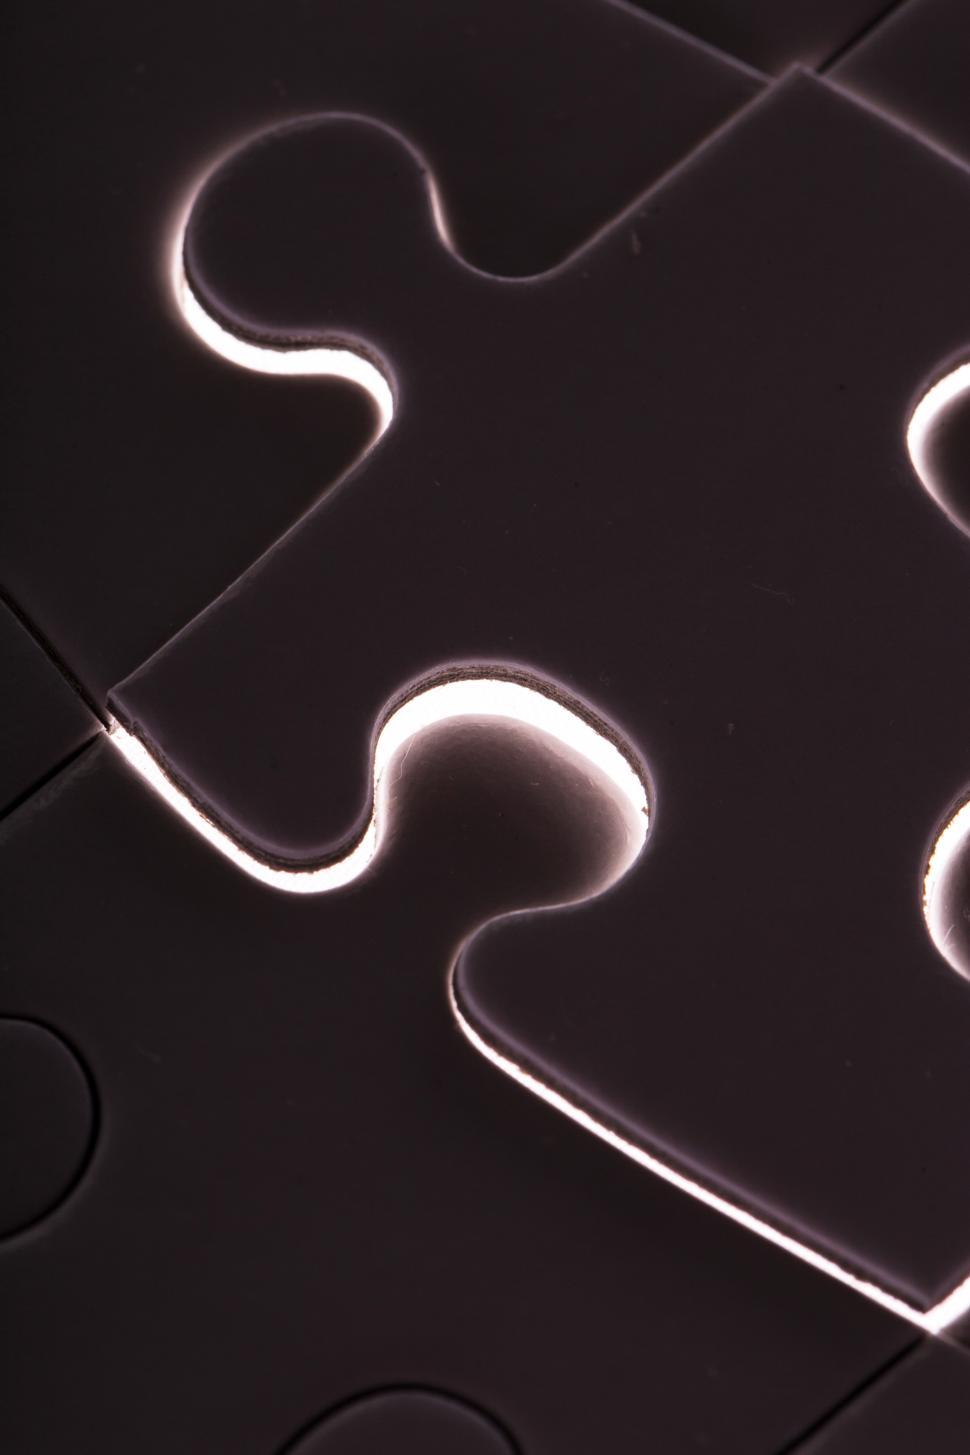 Free Image of Light around the puzzle piece 